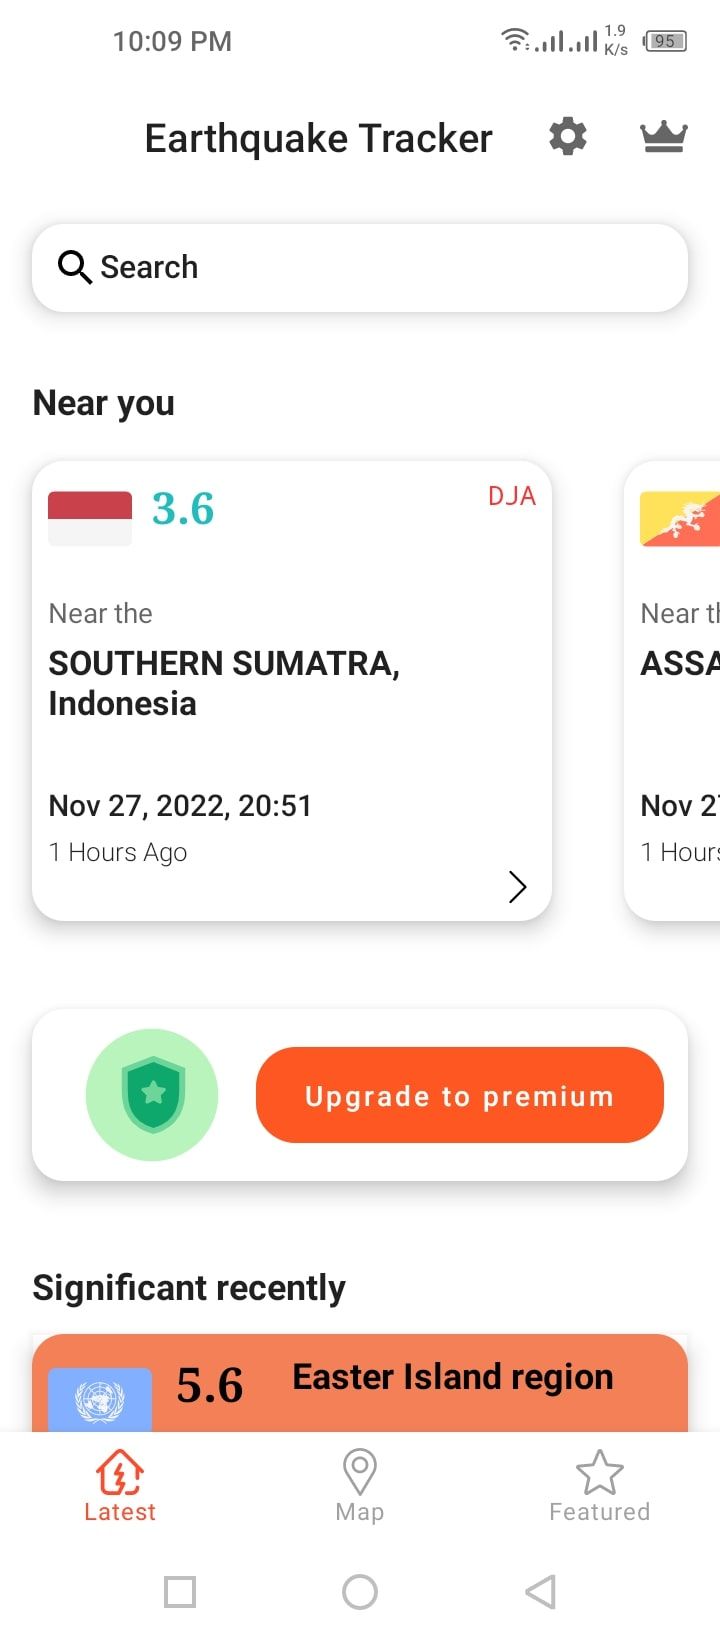 Earthquake Tracker App - Main